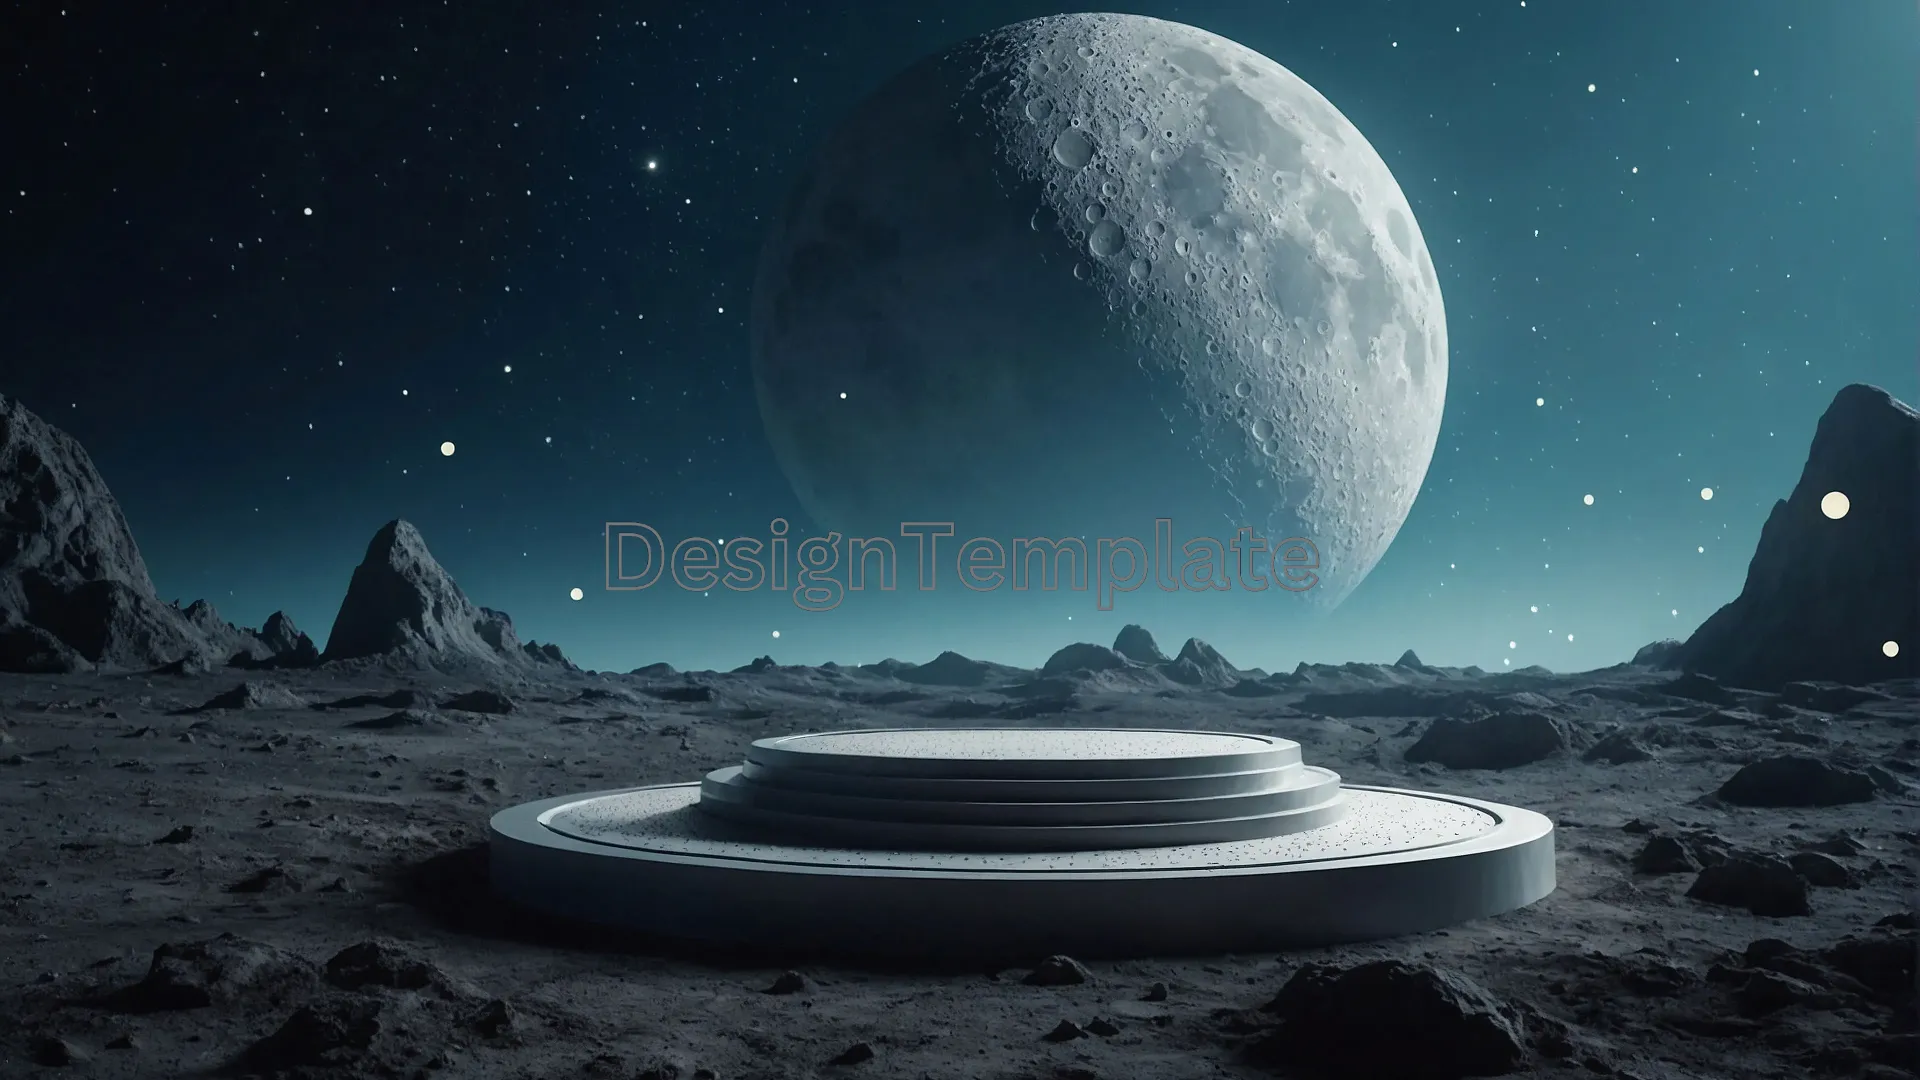 Calm Moonlit Night on Alien Planet Background Texture image